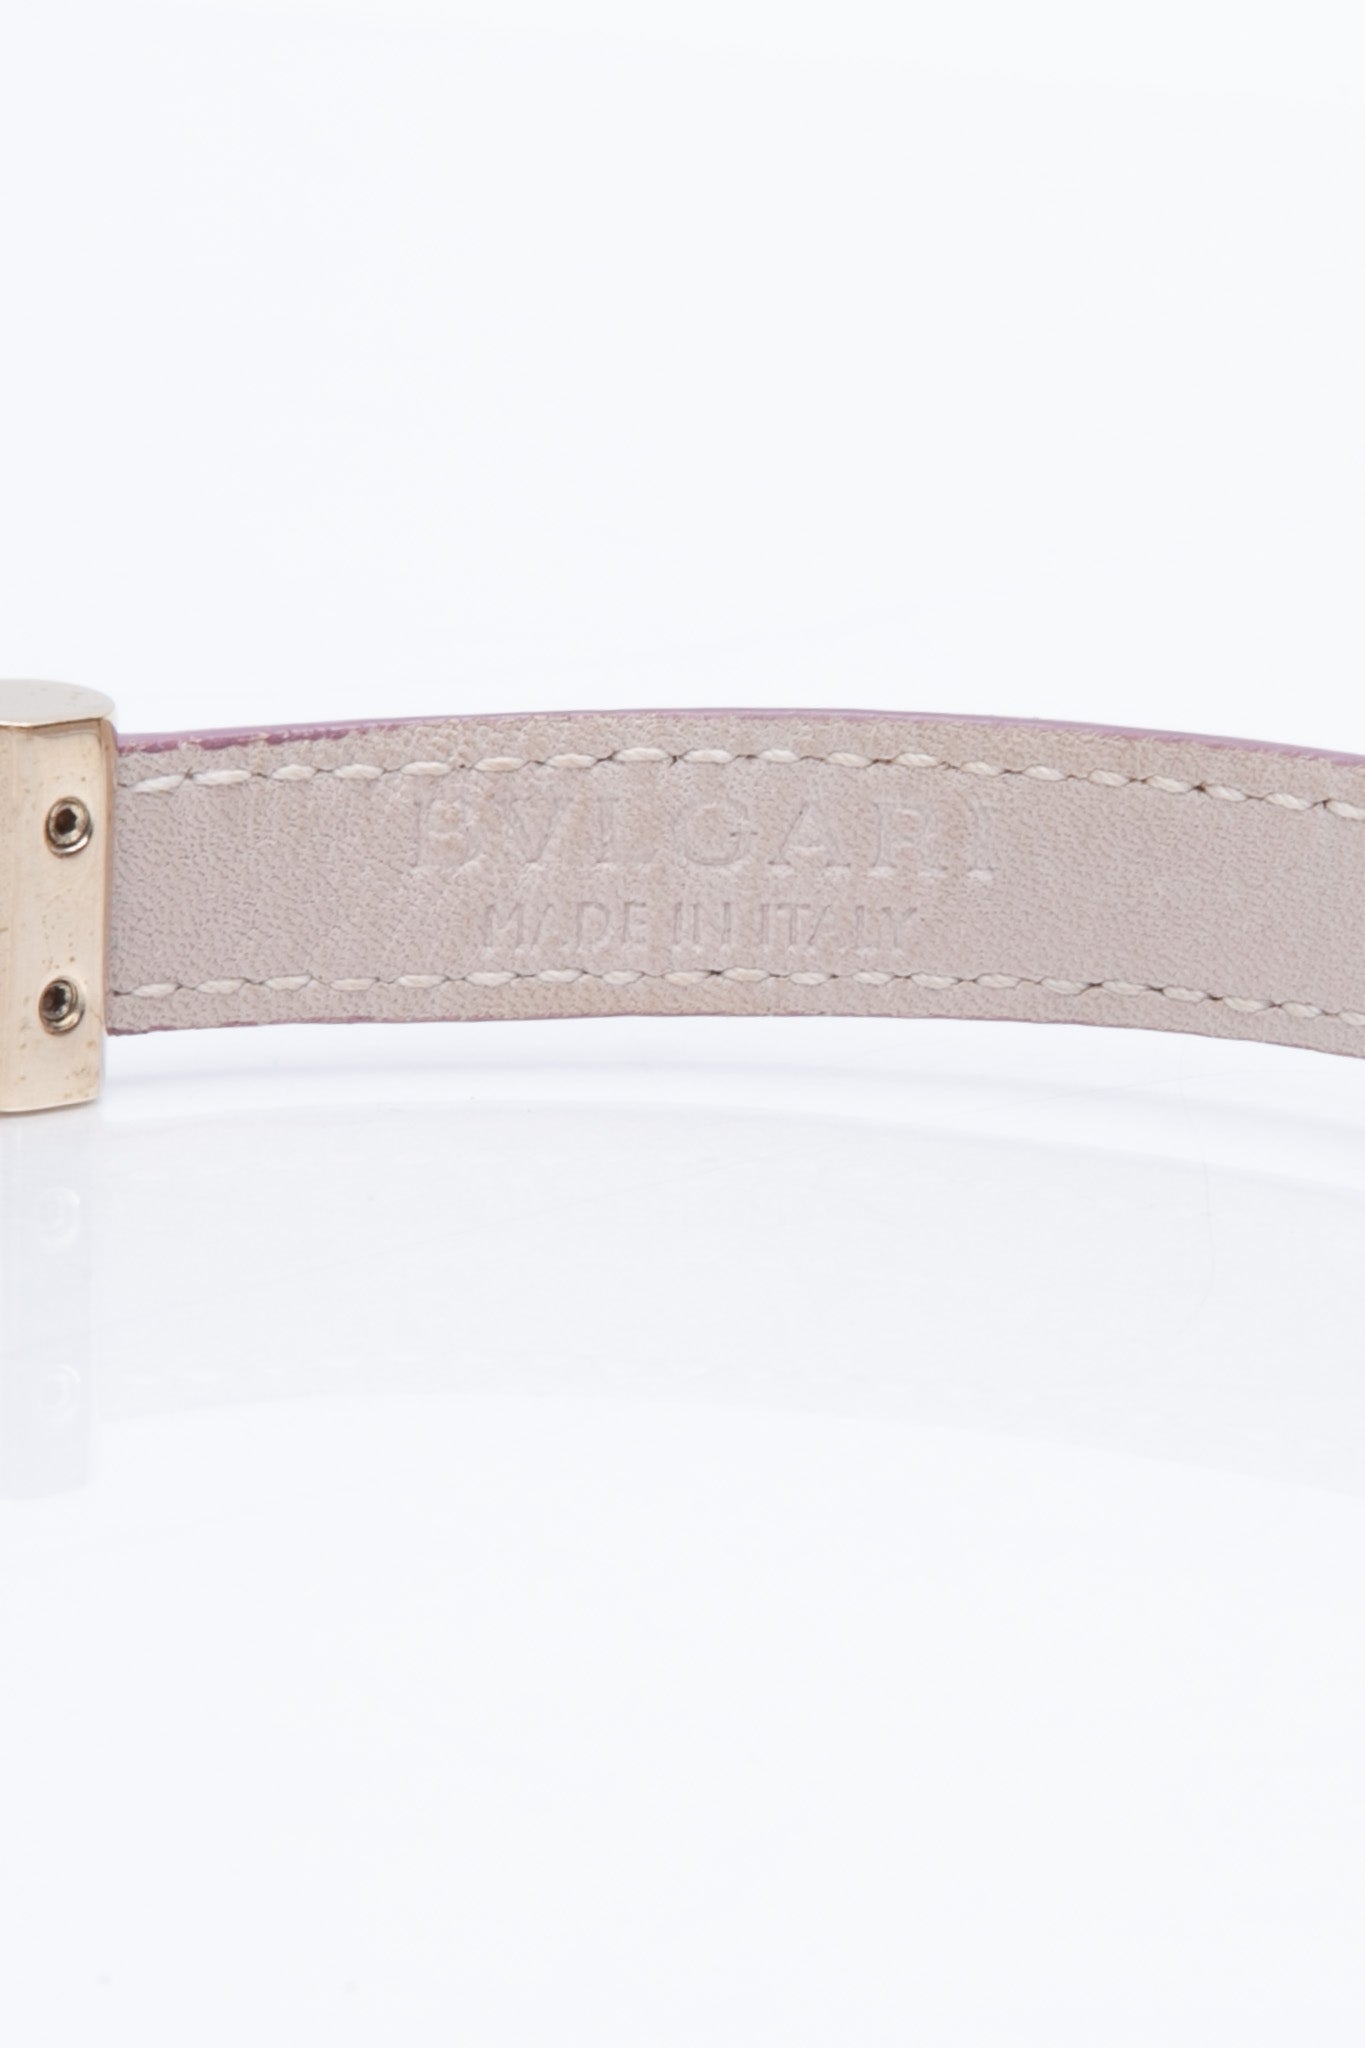 BVLGARI Double Purple Coiled Leather Bracelet